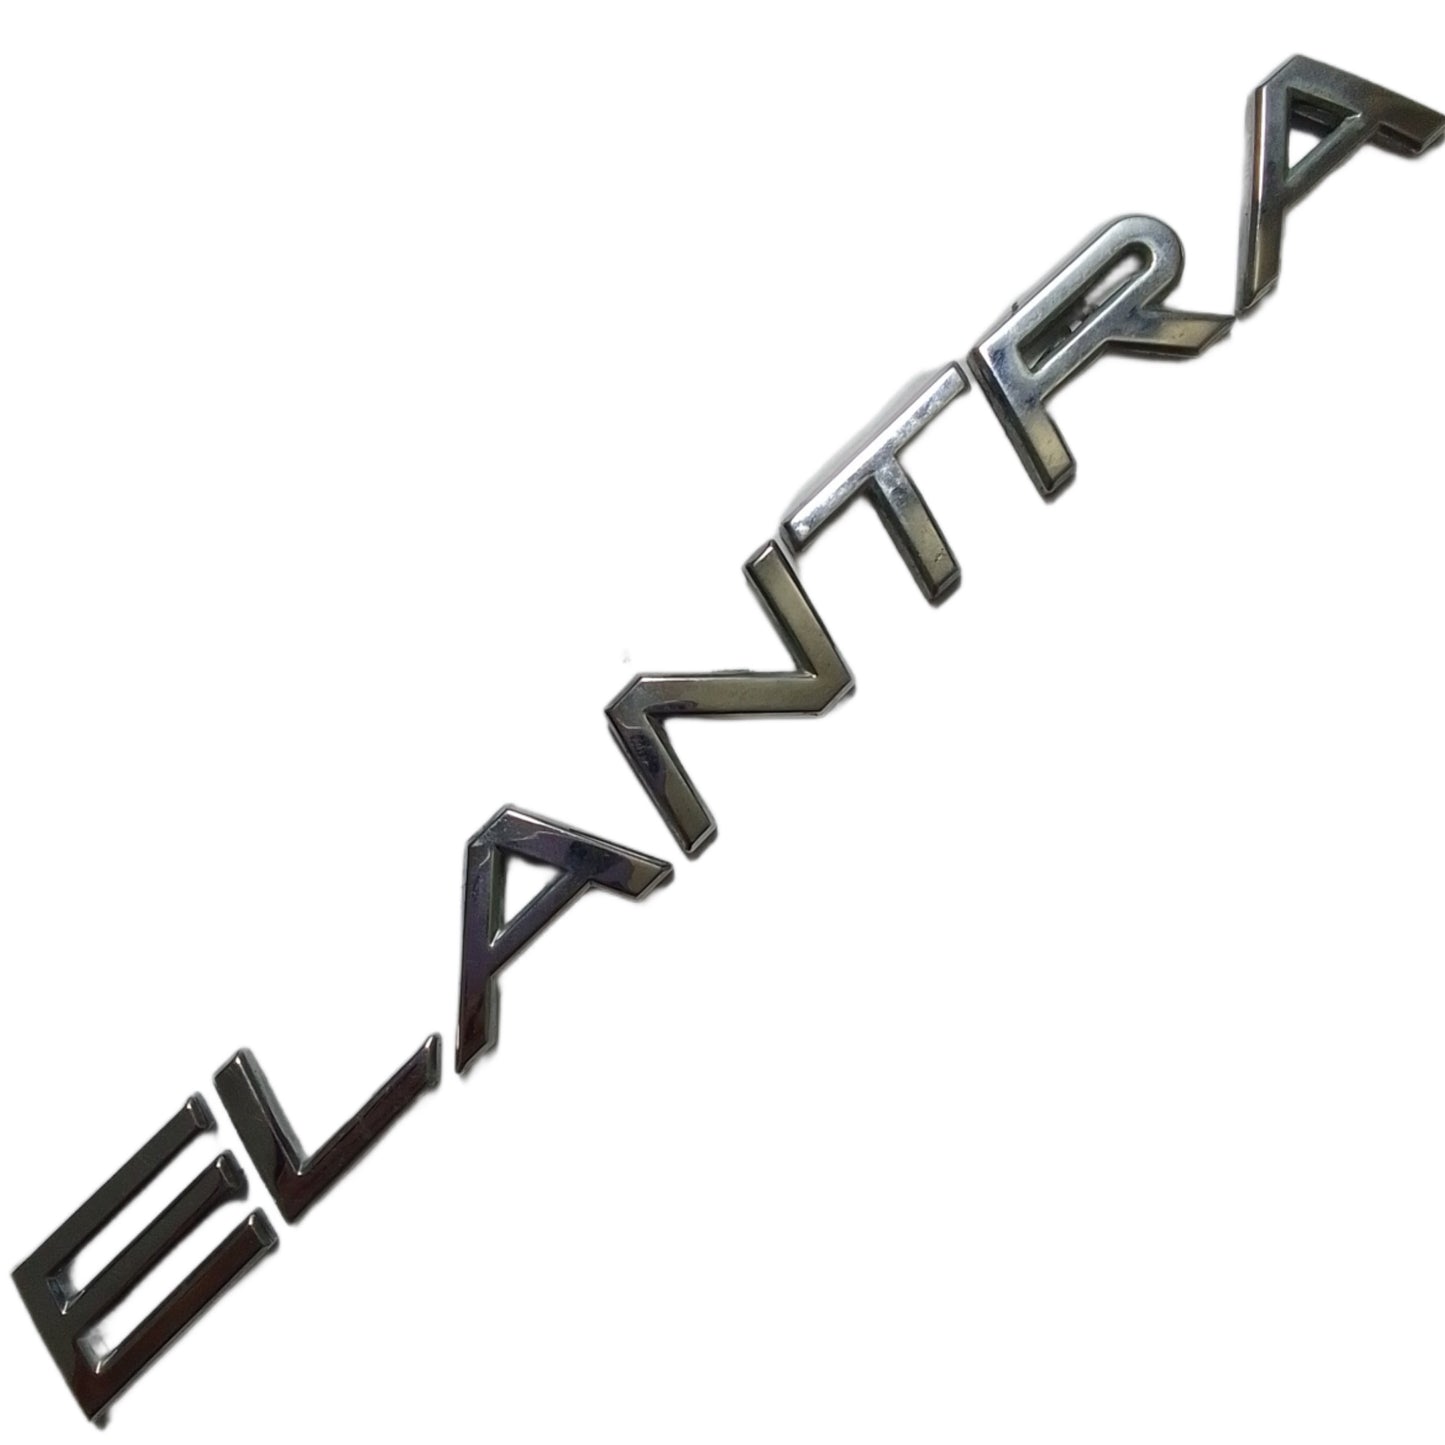 Emblema Letra Elantra